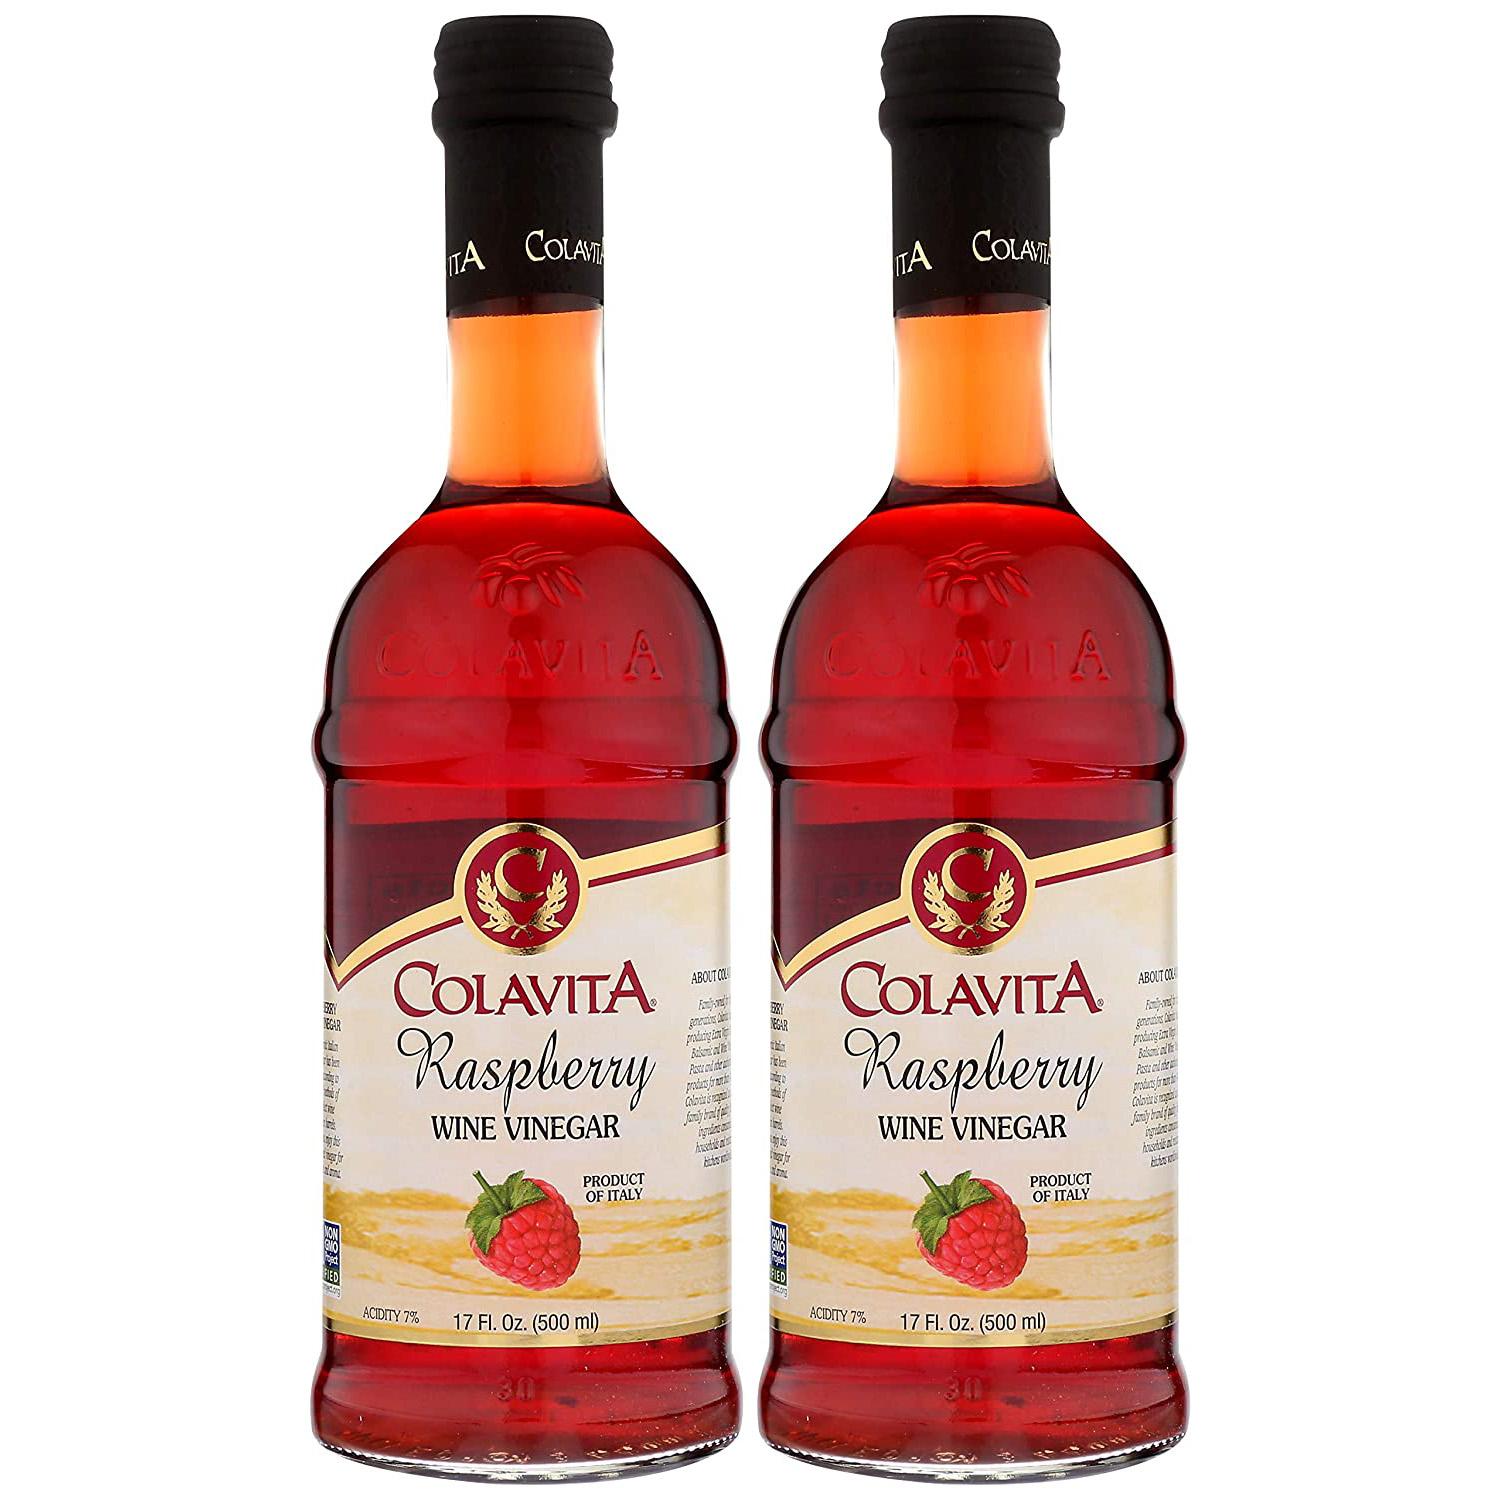 34oz Colavita Raspberry Red Wine Vinegar for $6.06 Shipped